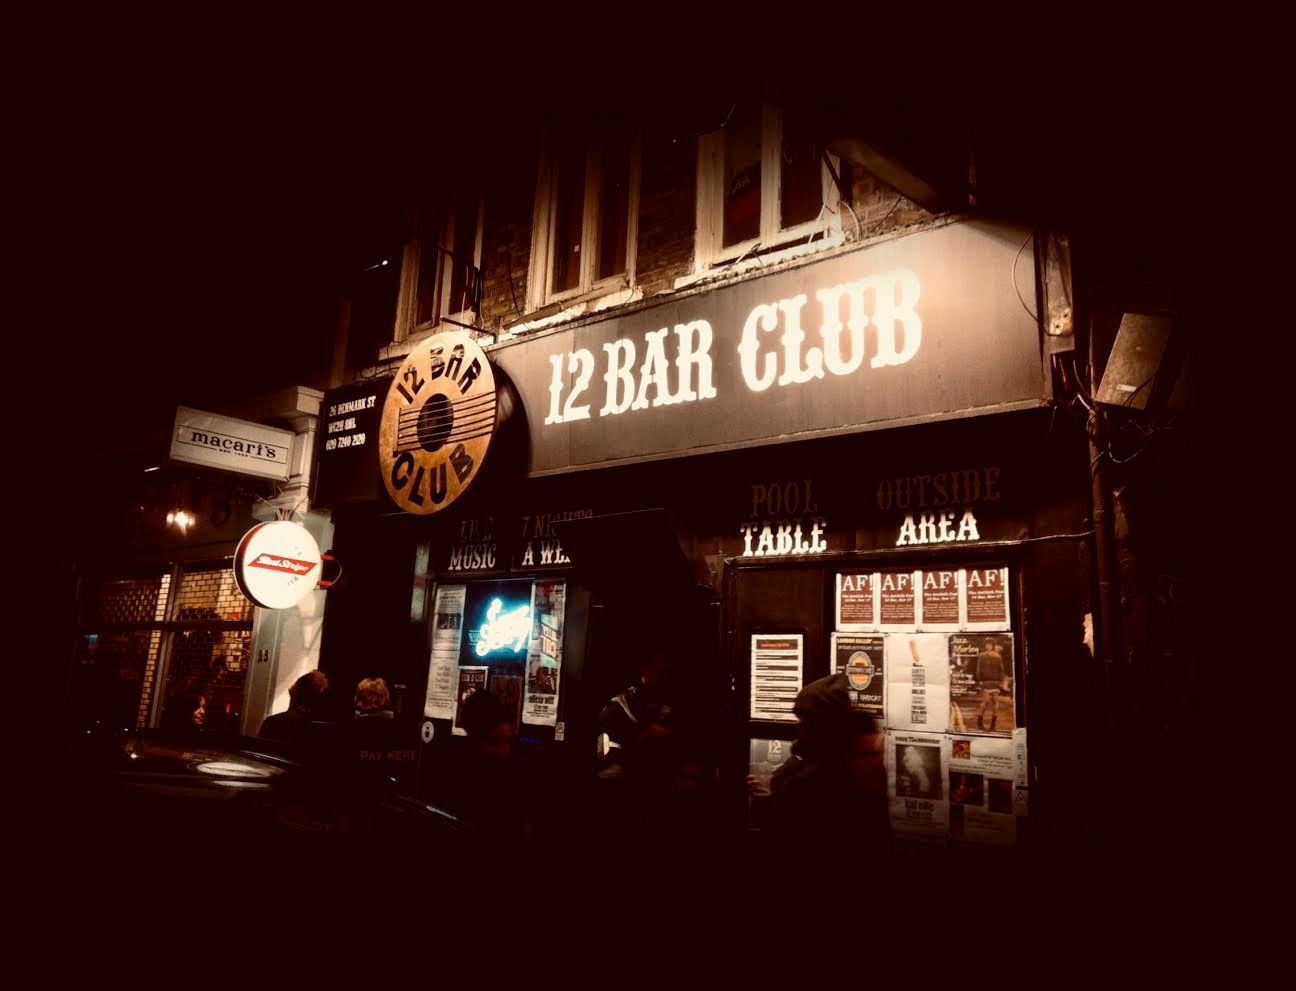 12 Bar Club at night, Denmark Street, London